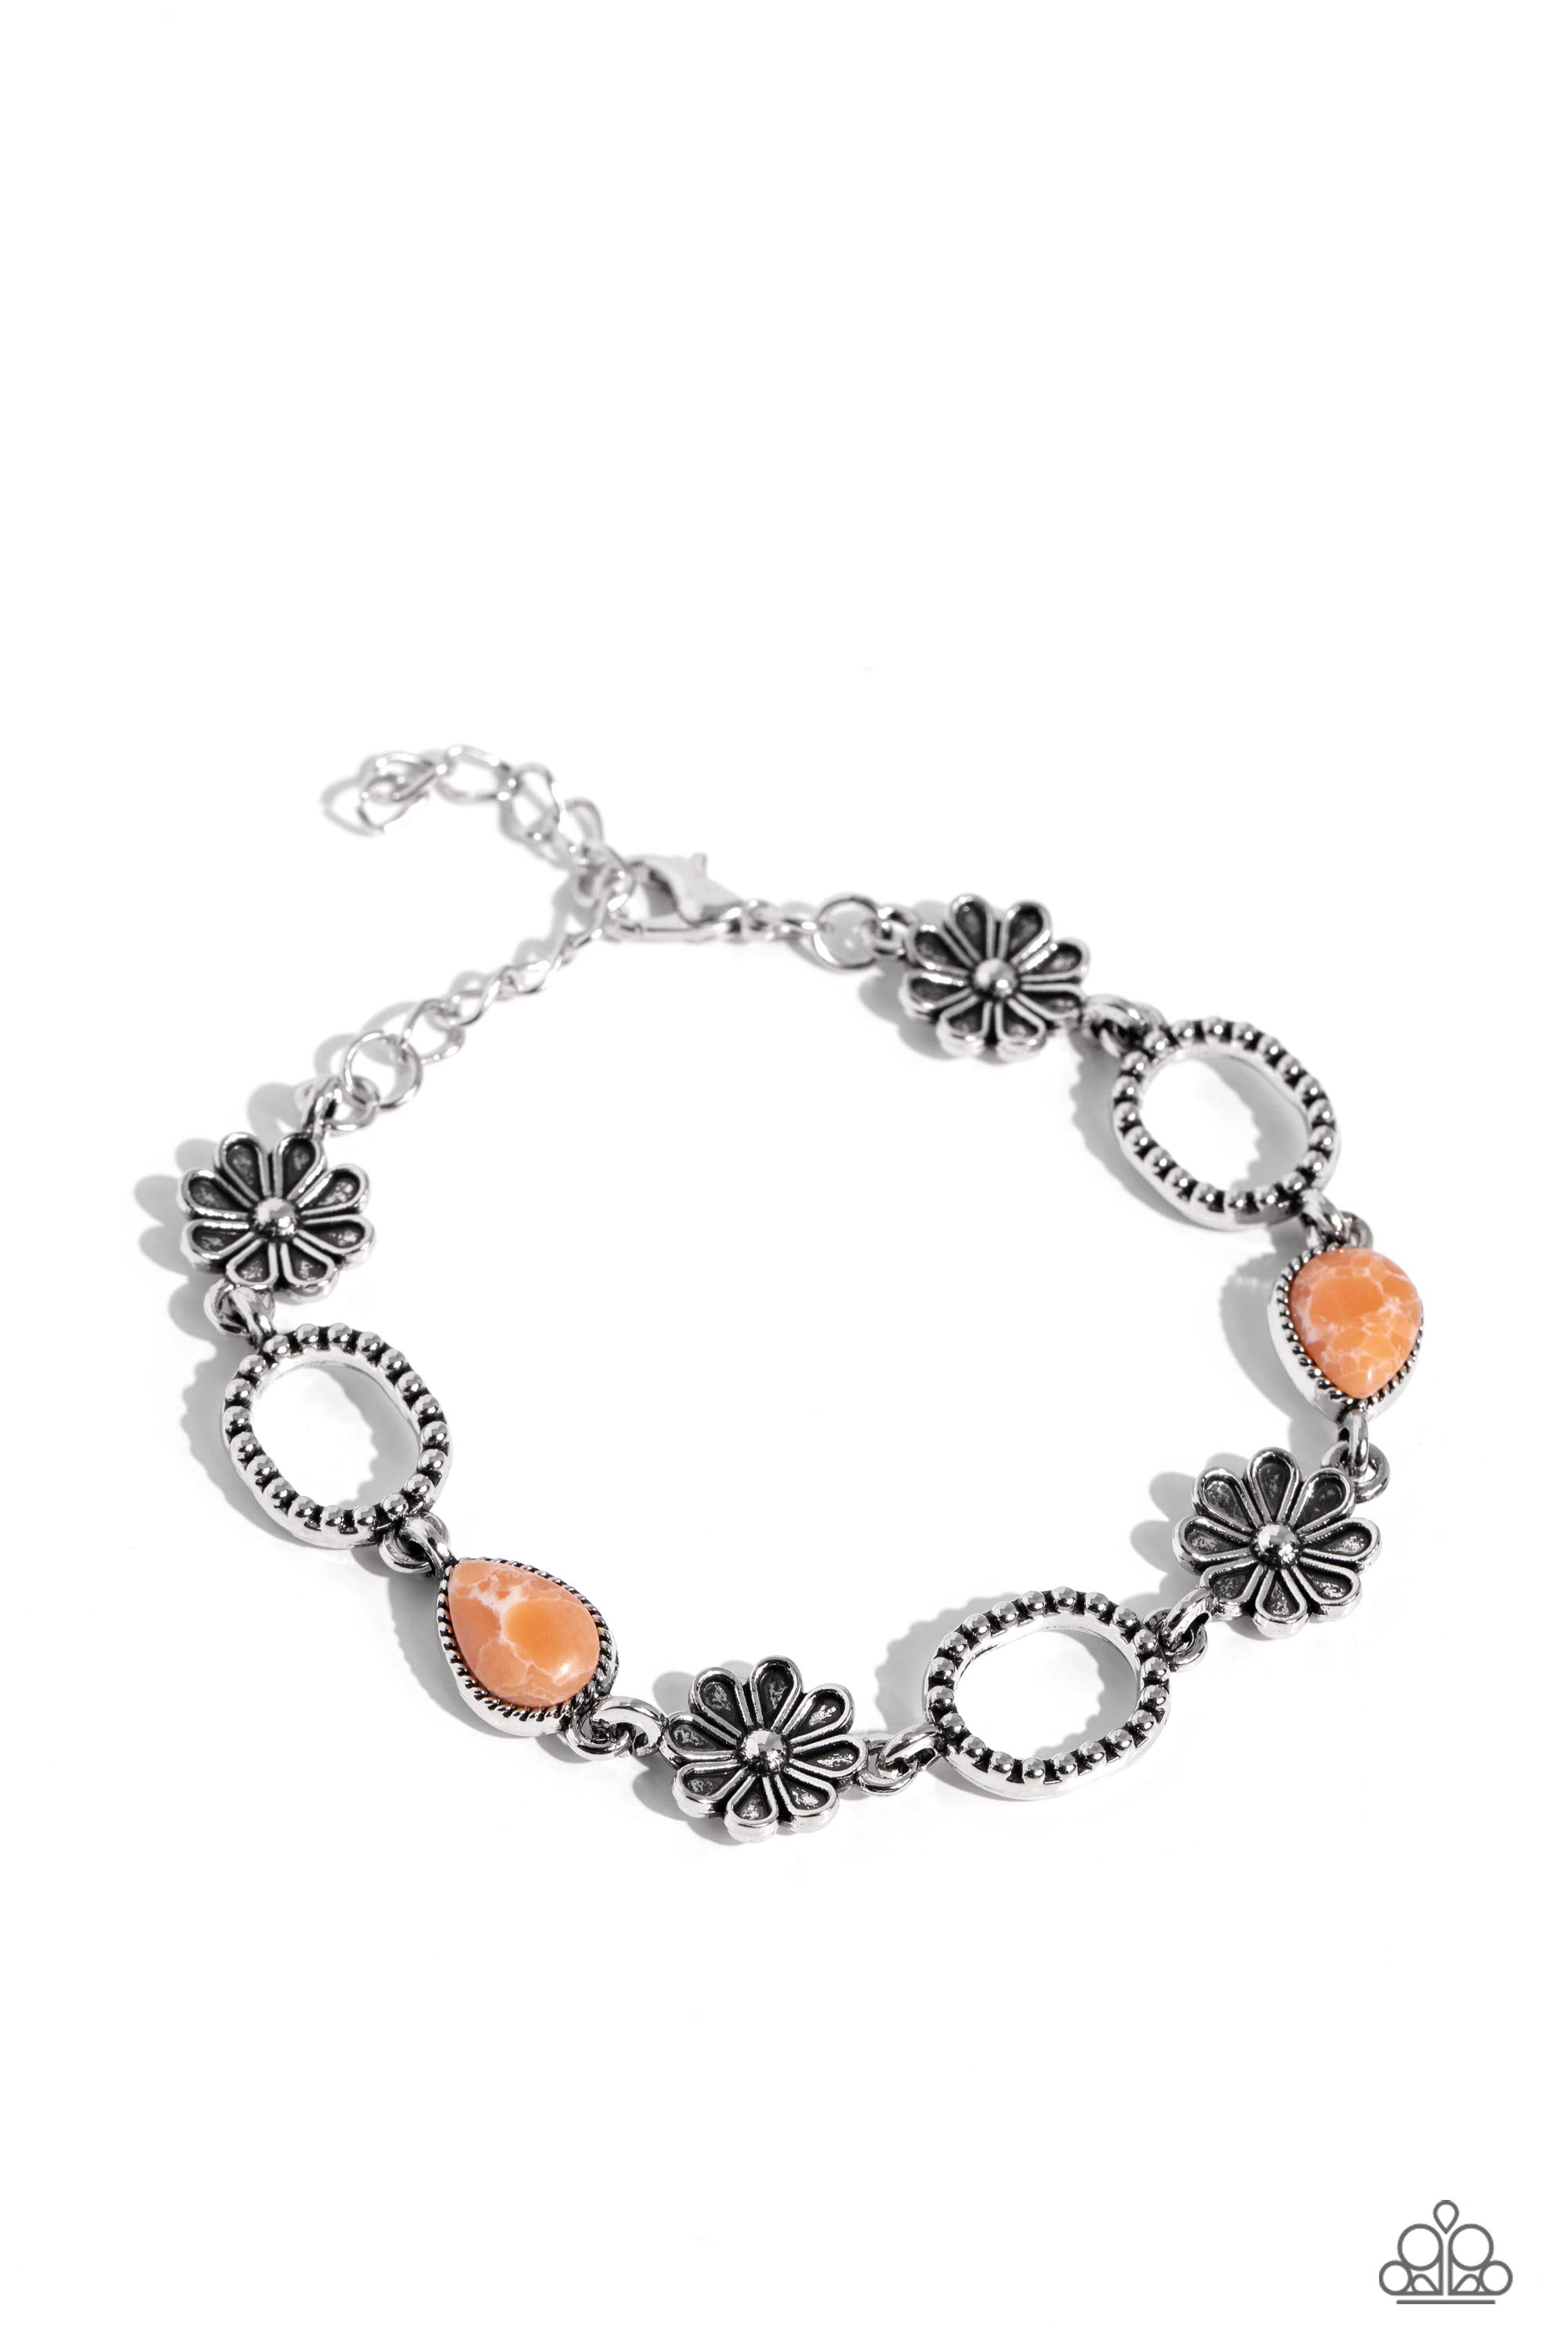 Casablanca Craze Orange Stone Bracelet - Paparazzi Accessories- lightbox - CarasShop.com - $5 Jewelry by Cara Jewels